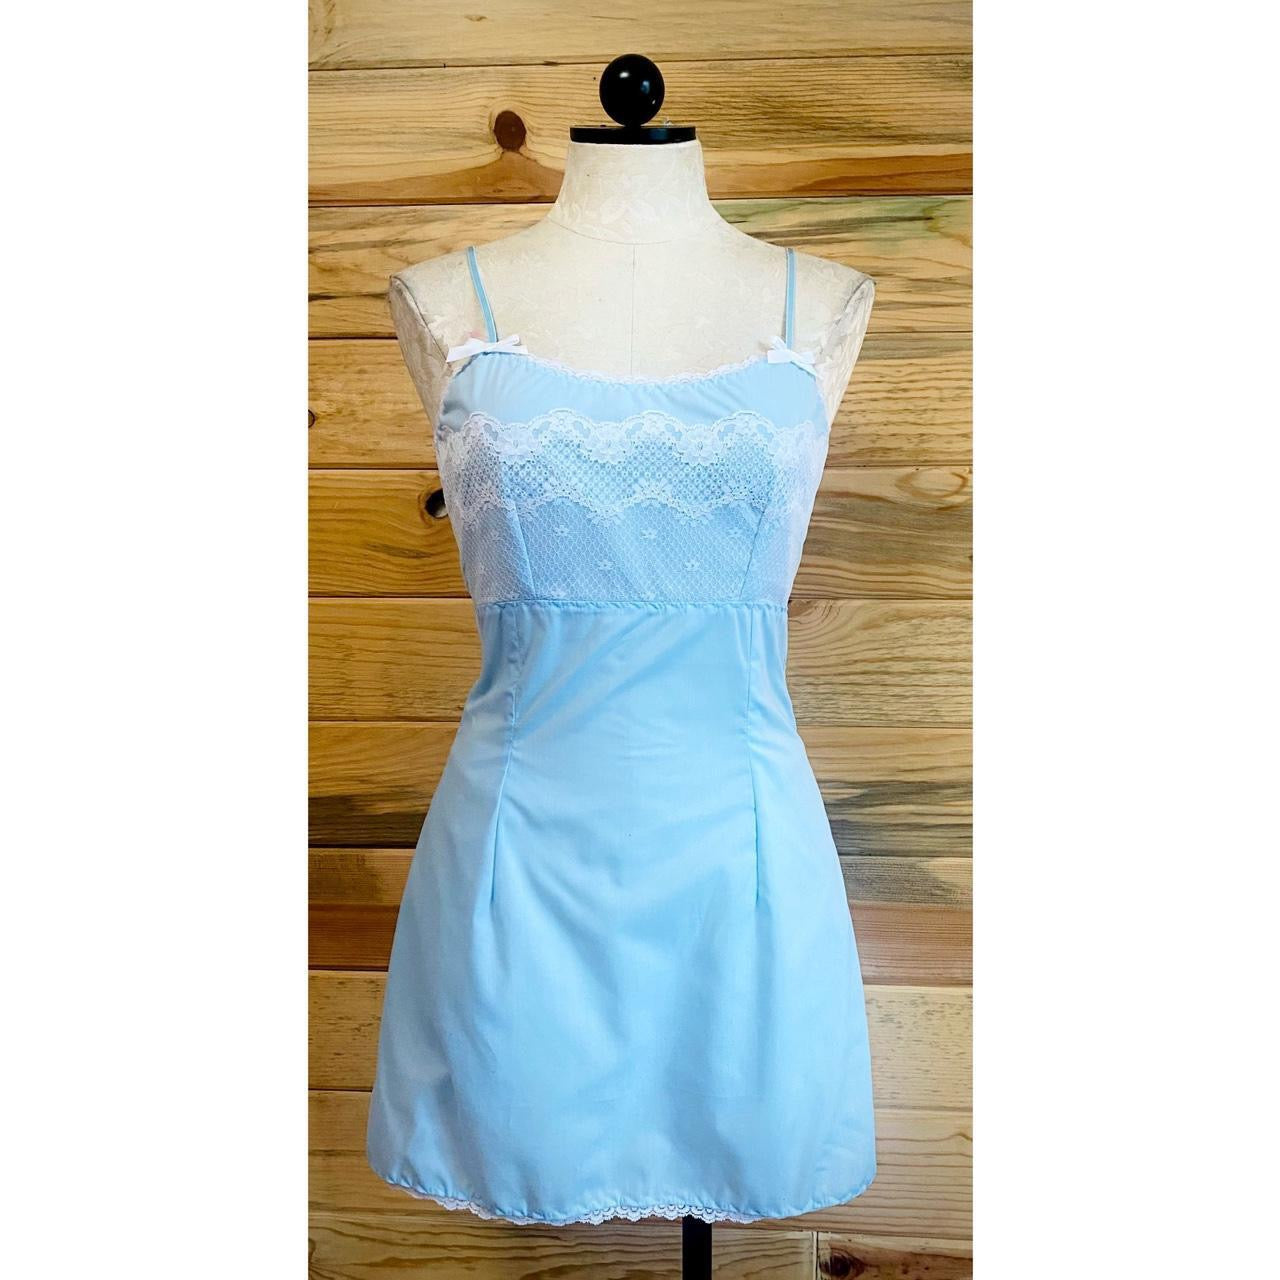 The Blanca Dress in Powder Blue